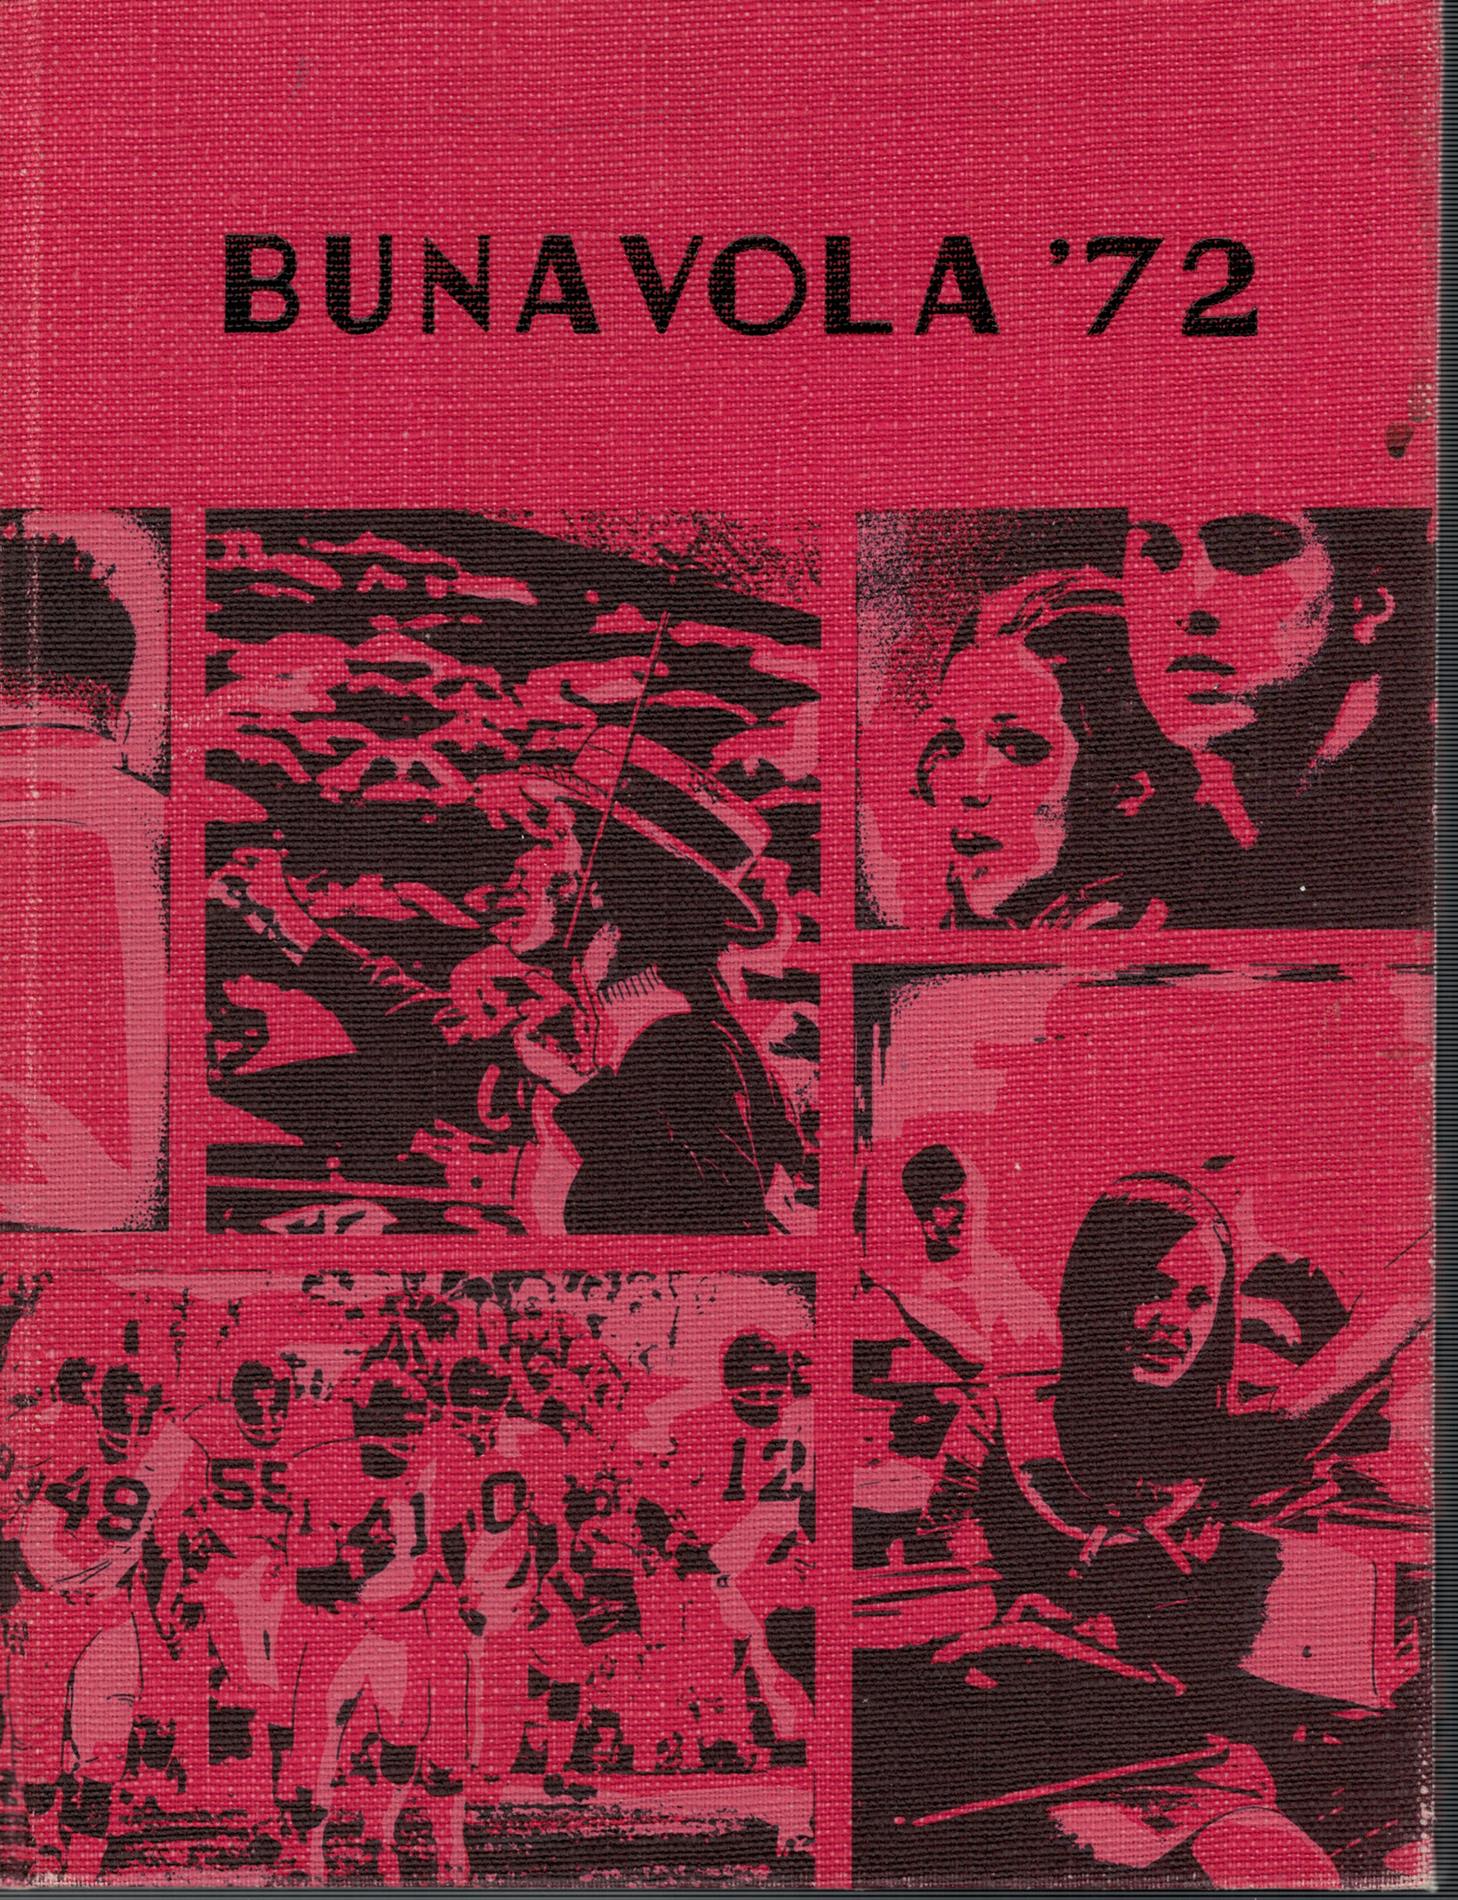 1972 Bunavola